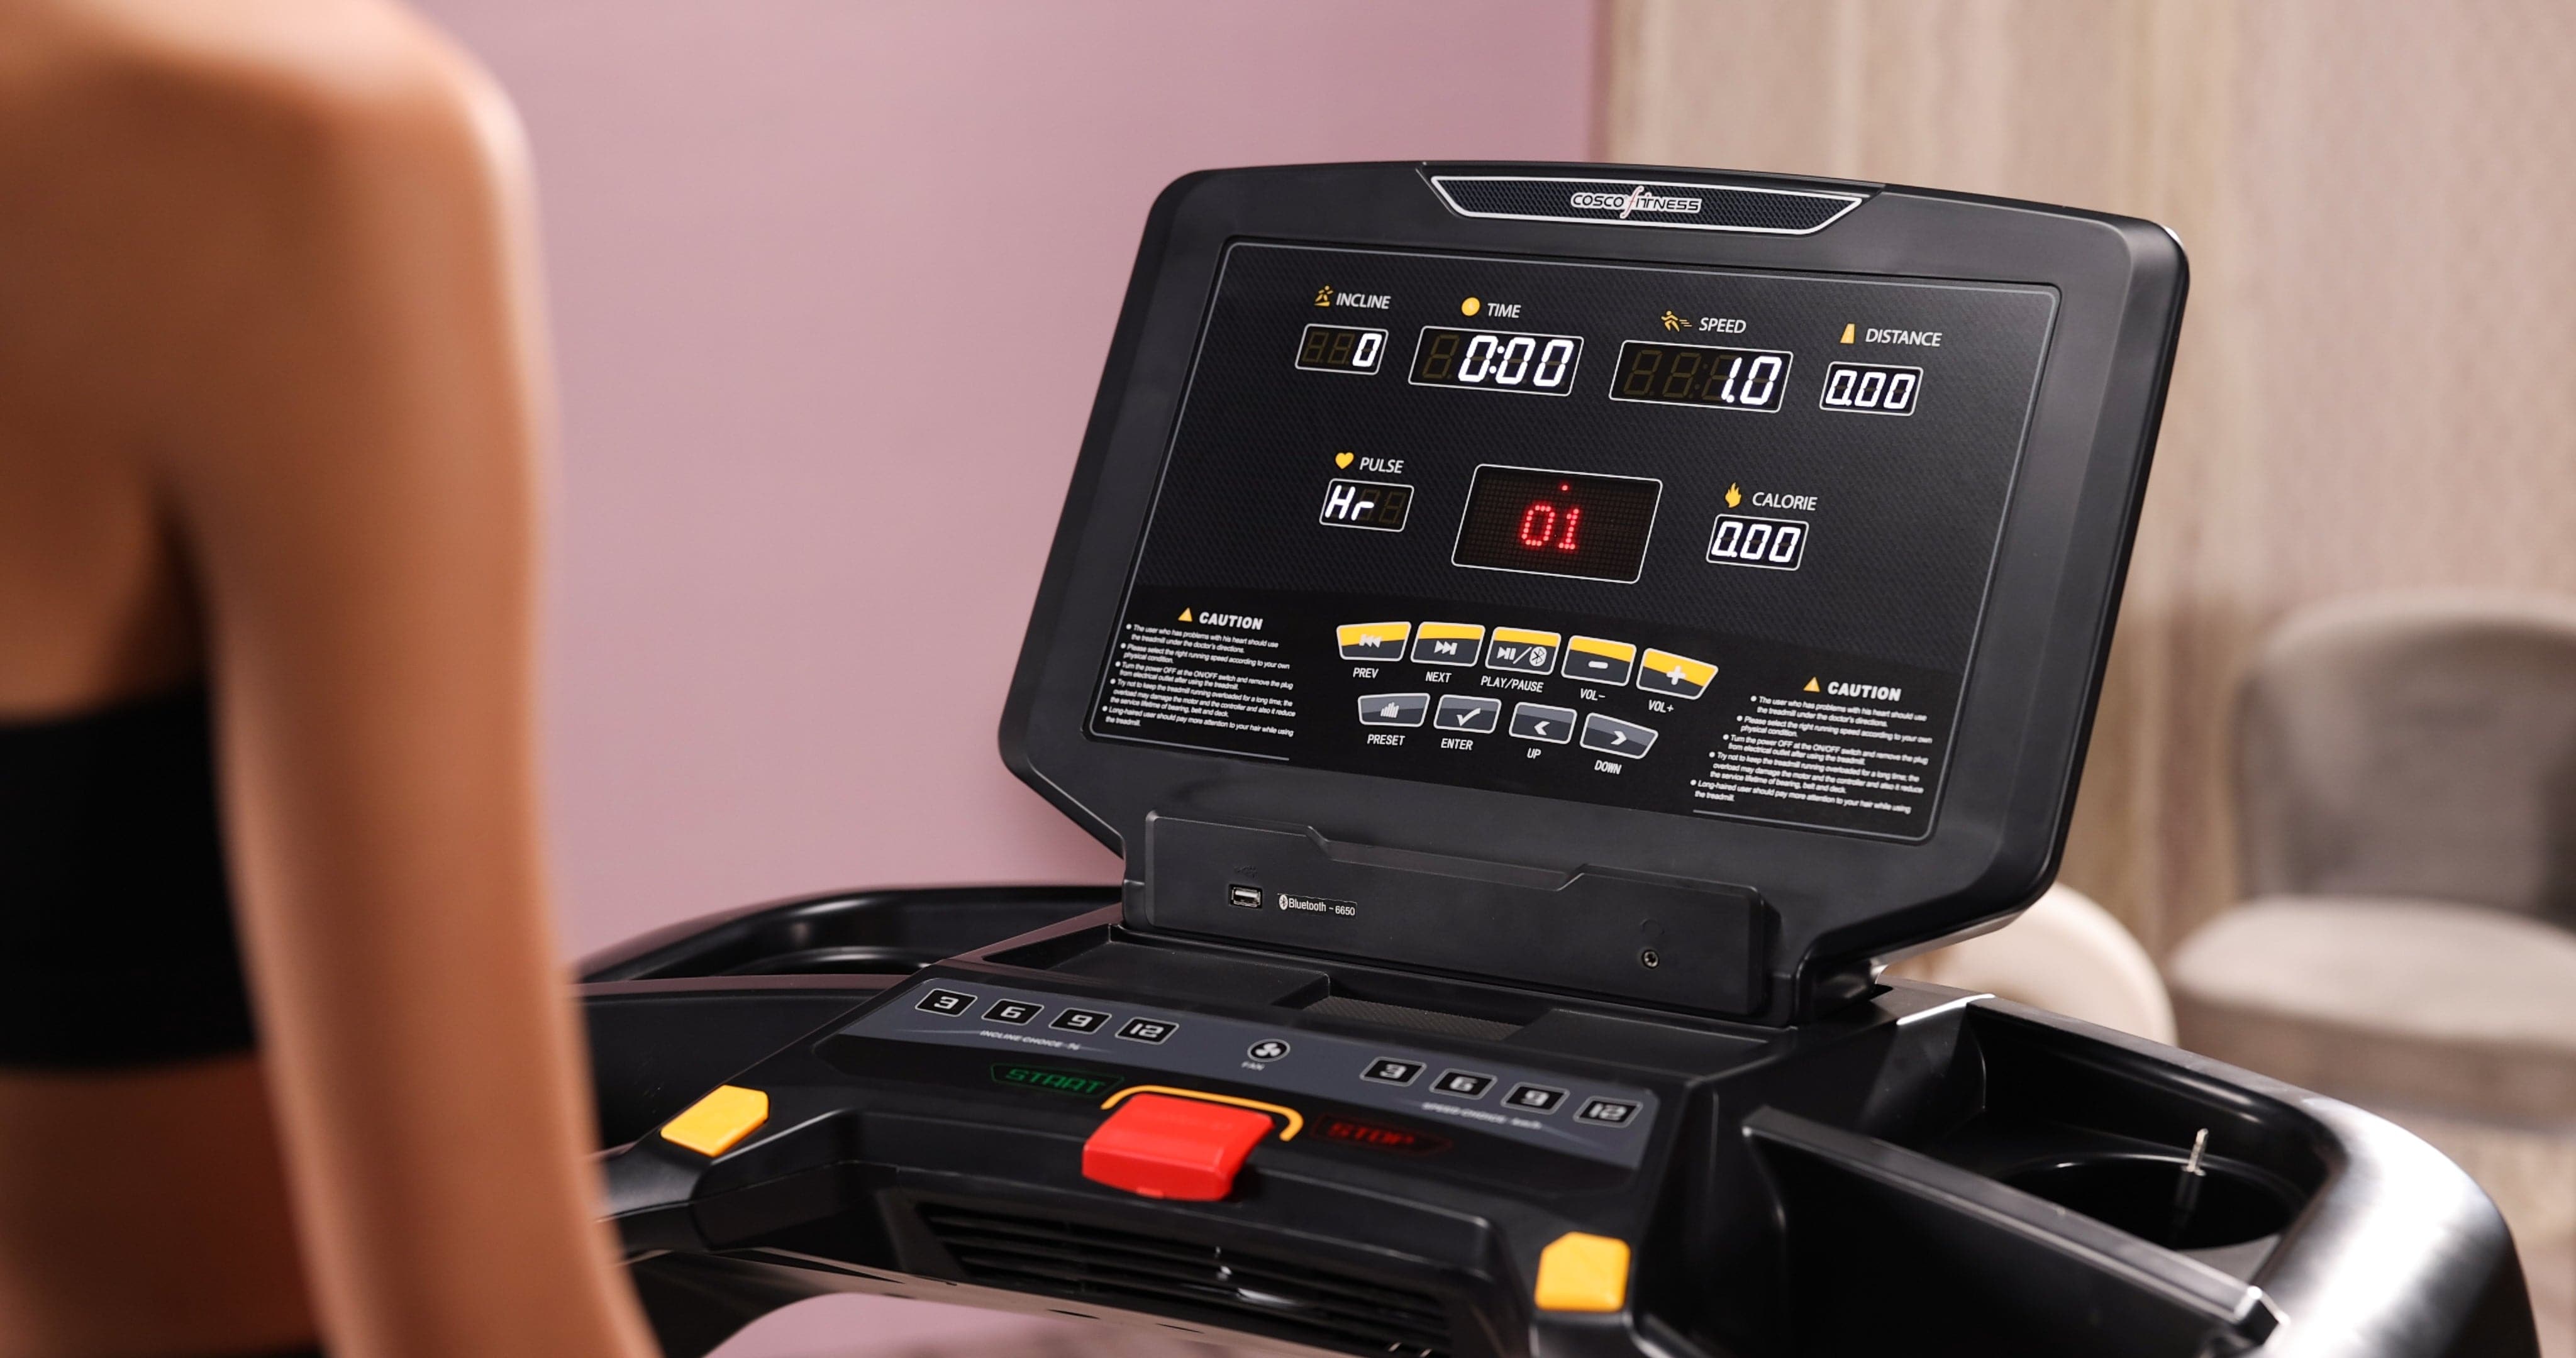 AC 18 Treadmill